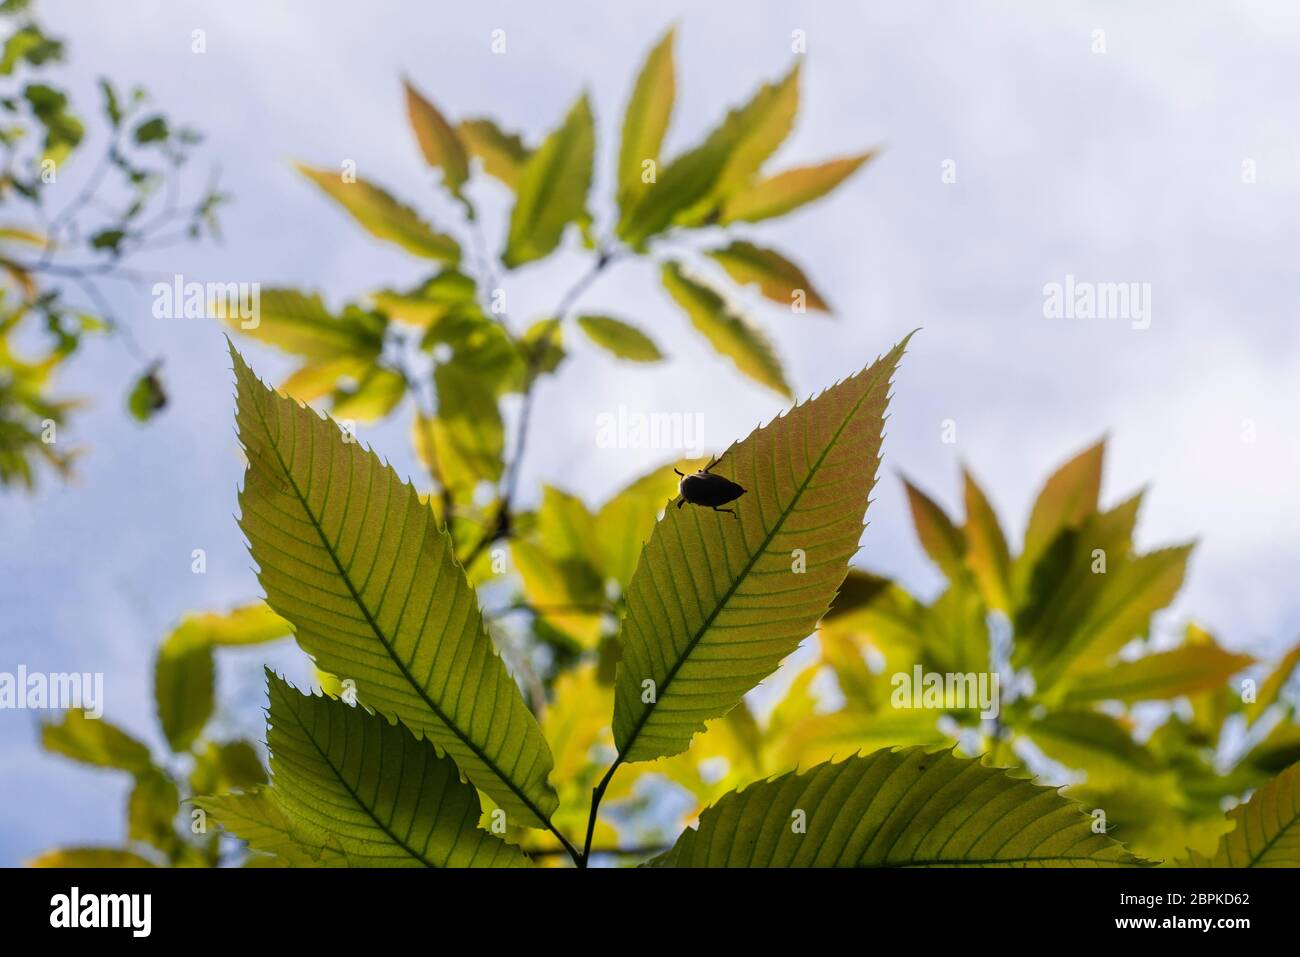 beetles eating leaves. scarabées mangeant des feuilles. Stock Photo